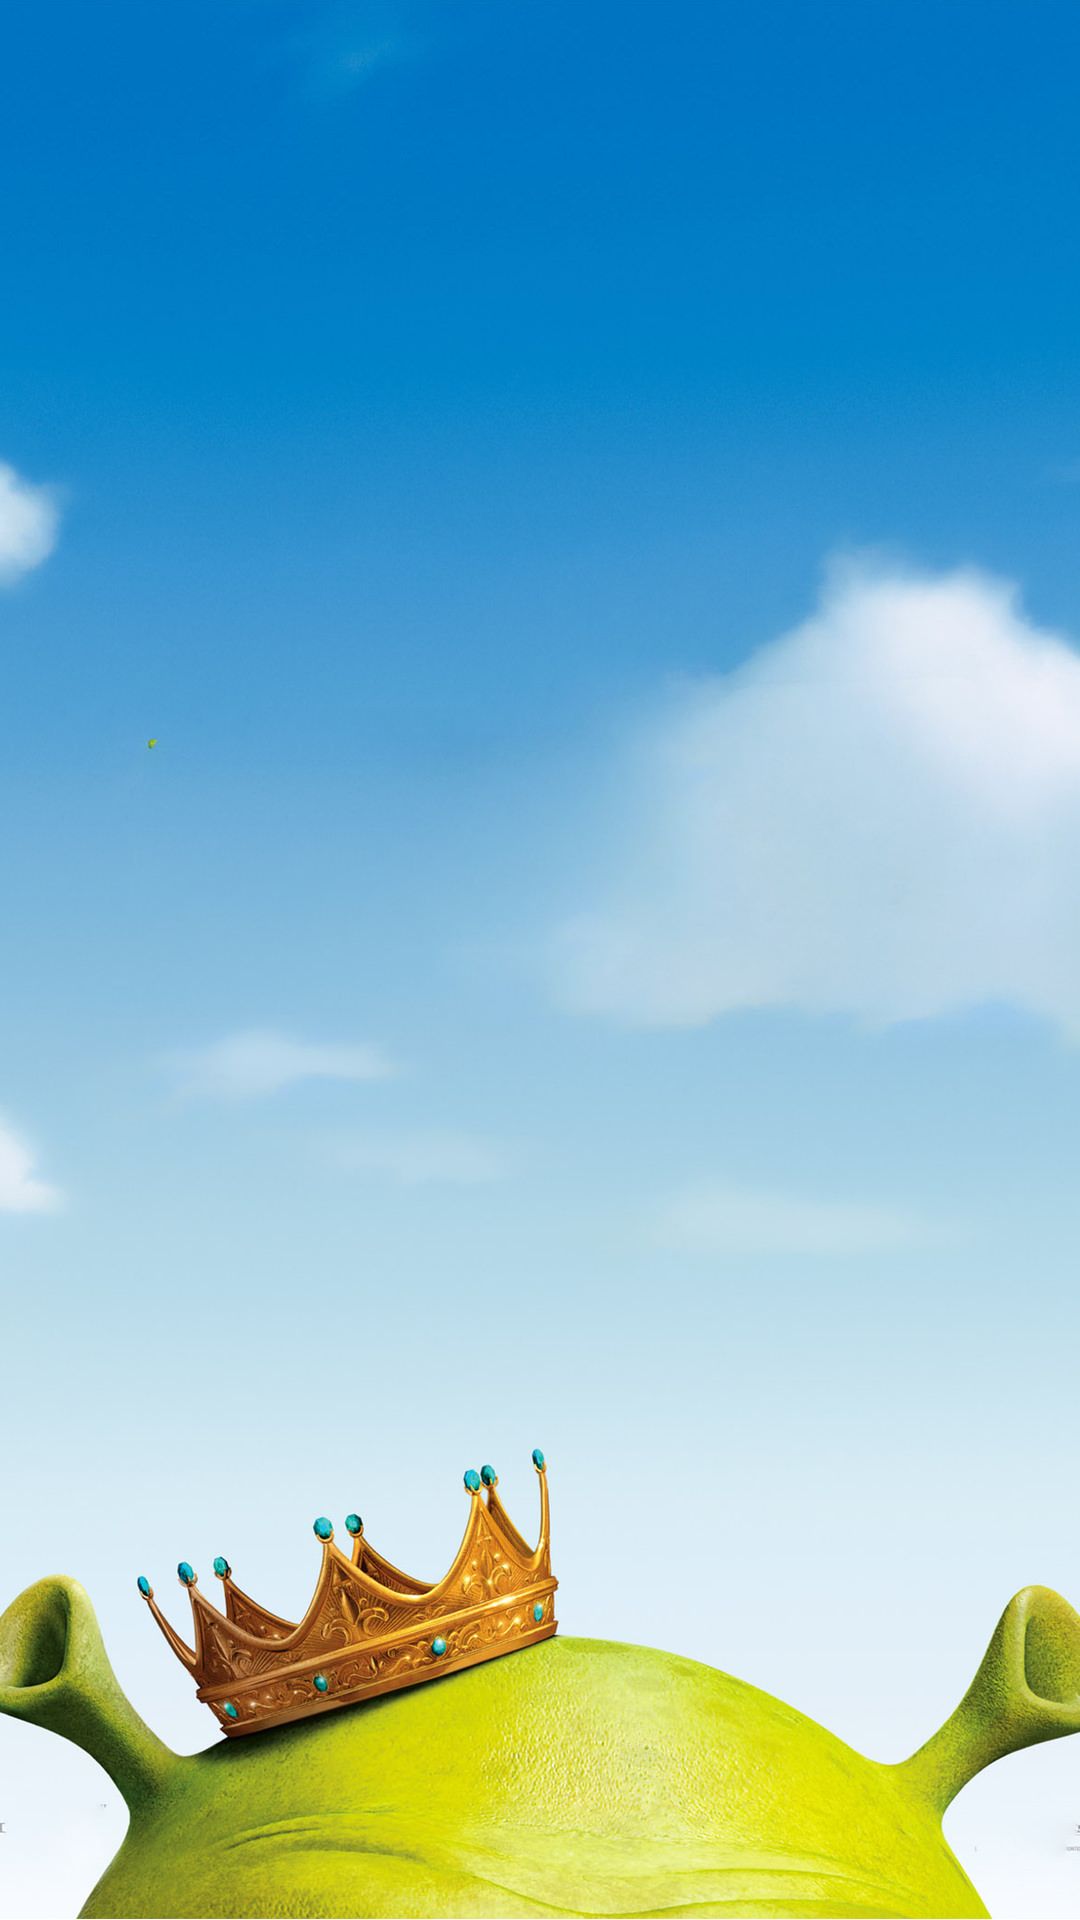 shrek wallpaper iphone,sky,natural landscape,cloud,footwear,illustration